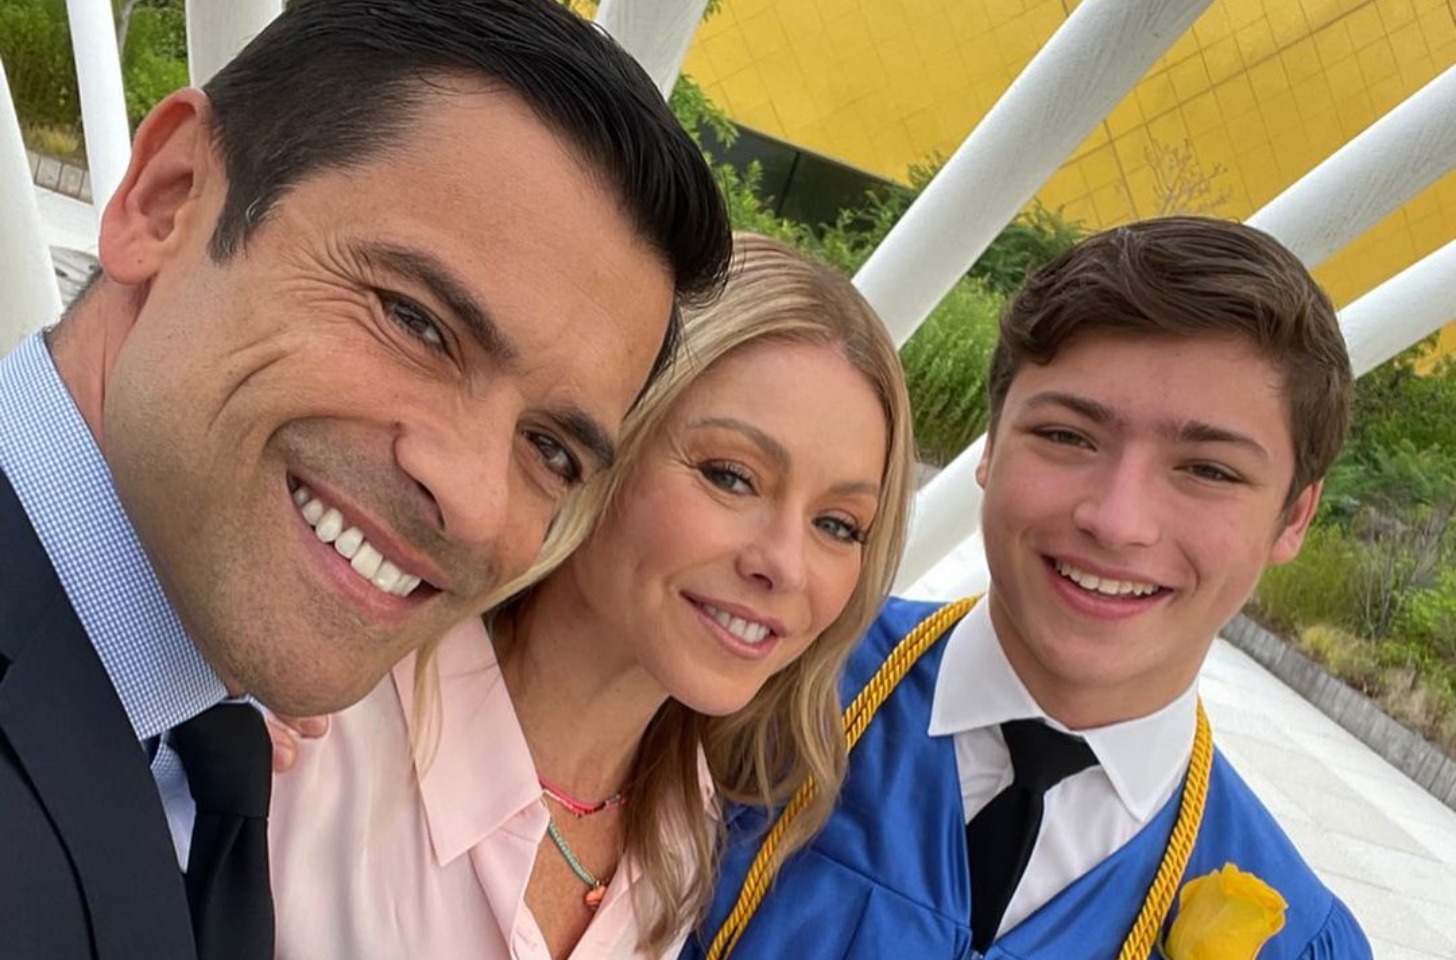 Mark Consuelos, Kelly Ripa, and Joaquin Antonio Consuelos smiling together at a graduation ceremony.